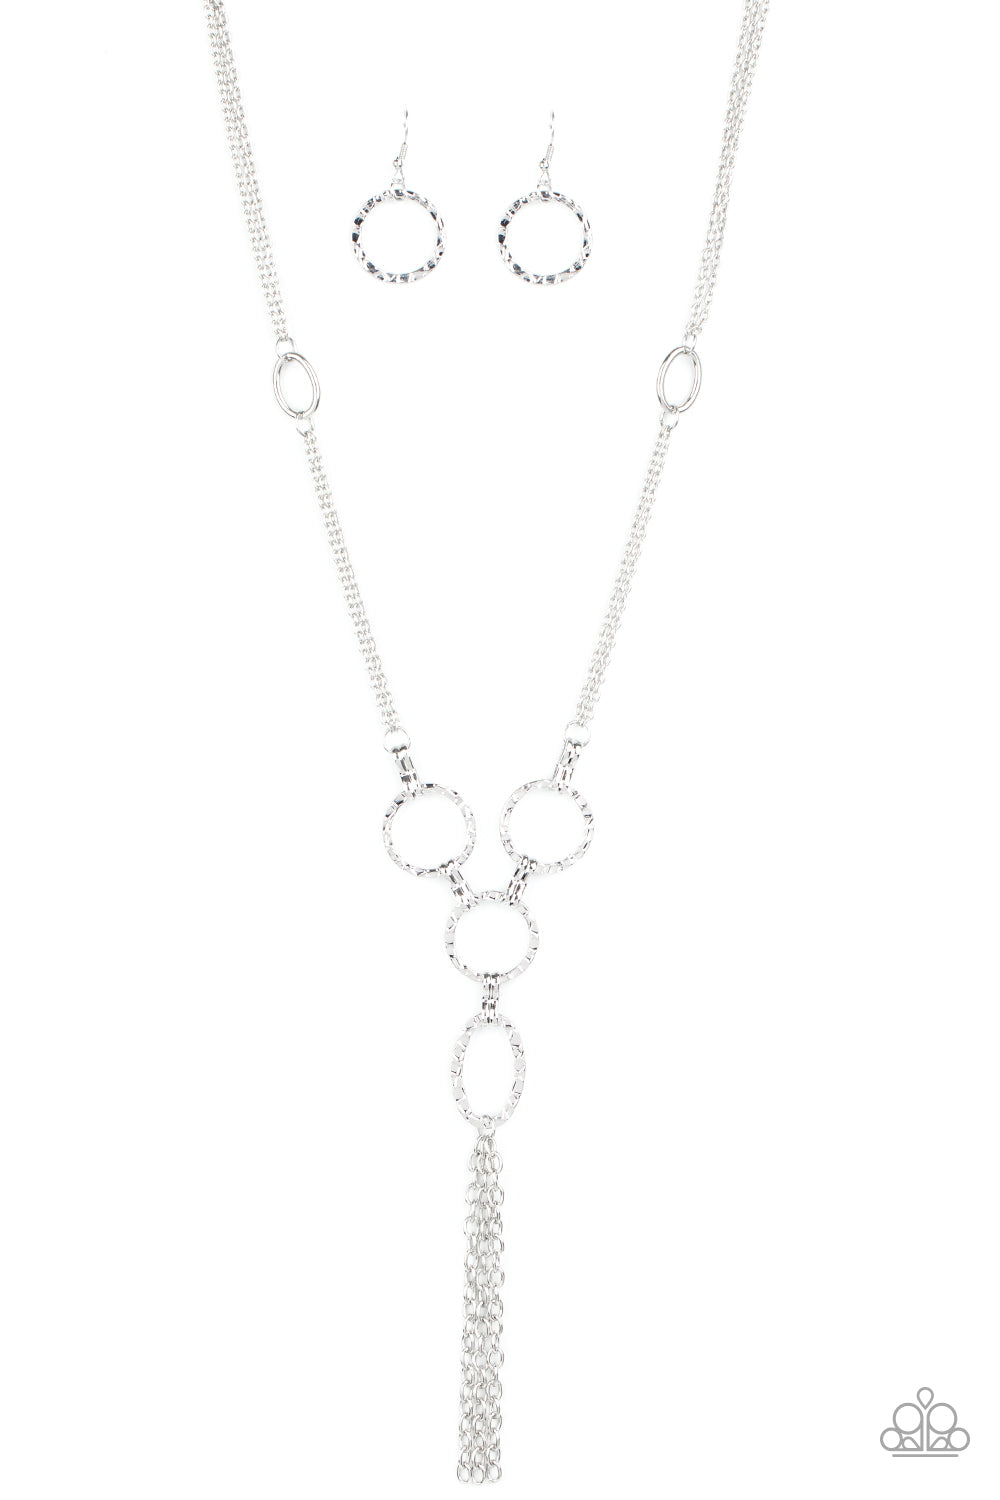 Metro Mechanics - silver - Paparazzi necklace – JewelryBlingThing